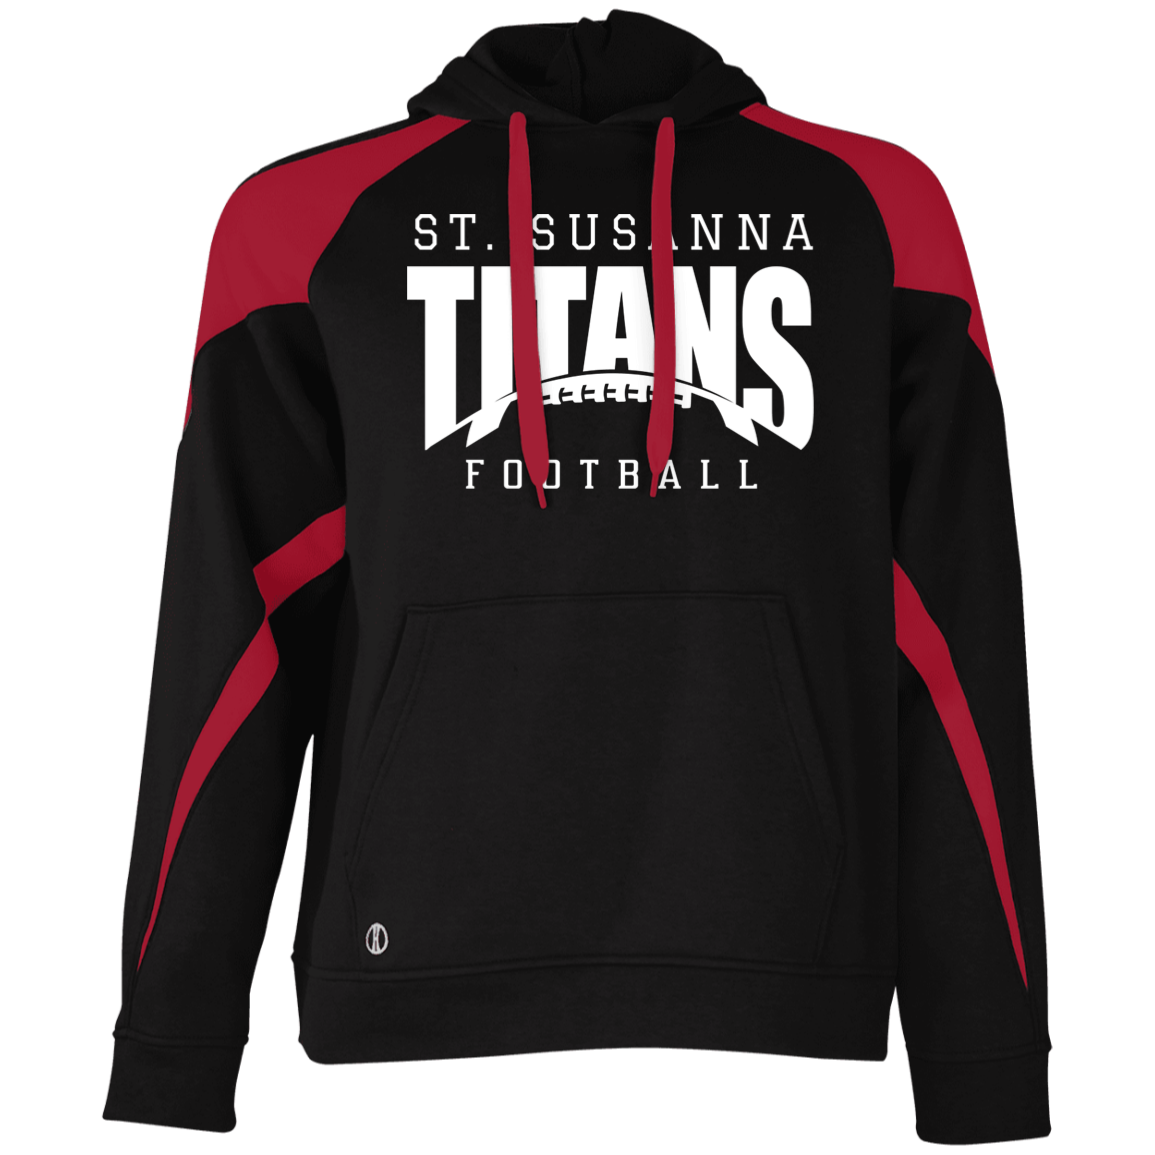 St. Susanna Titans Football Red Black Colorblock Fleece Hoodie